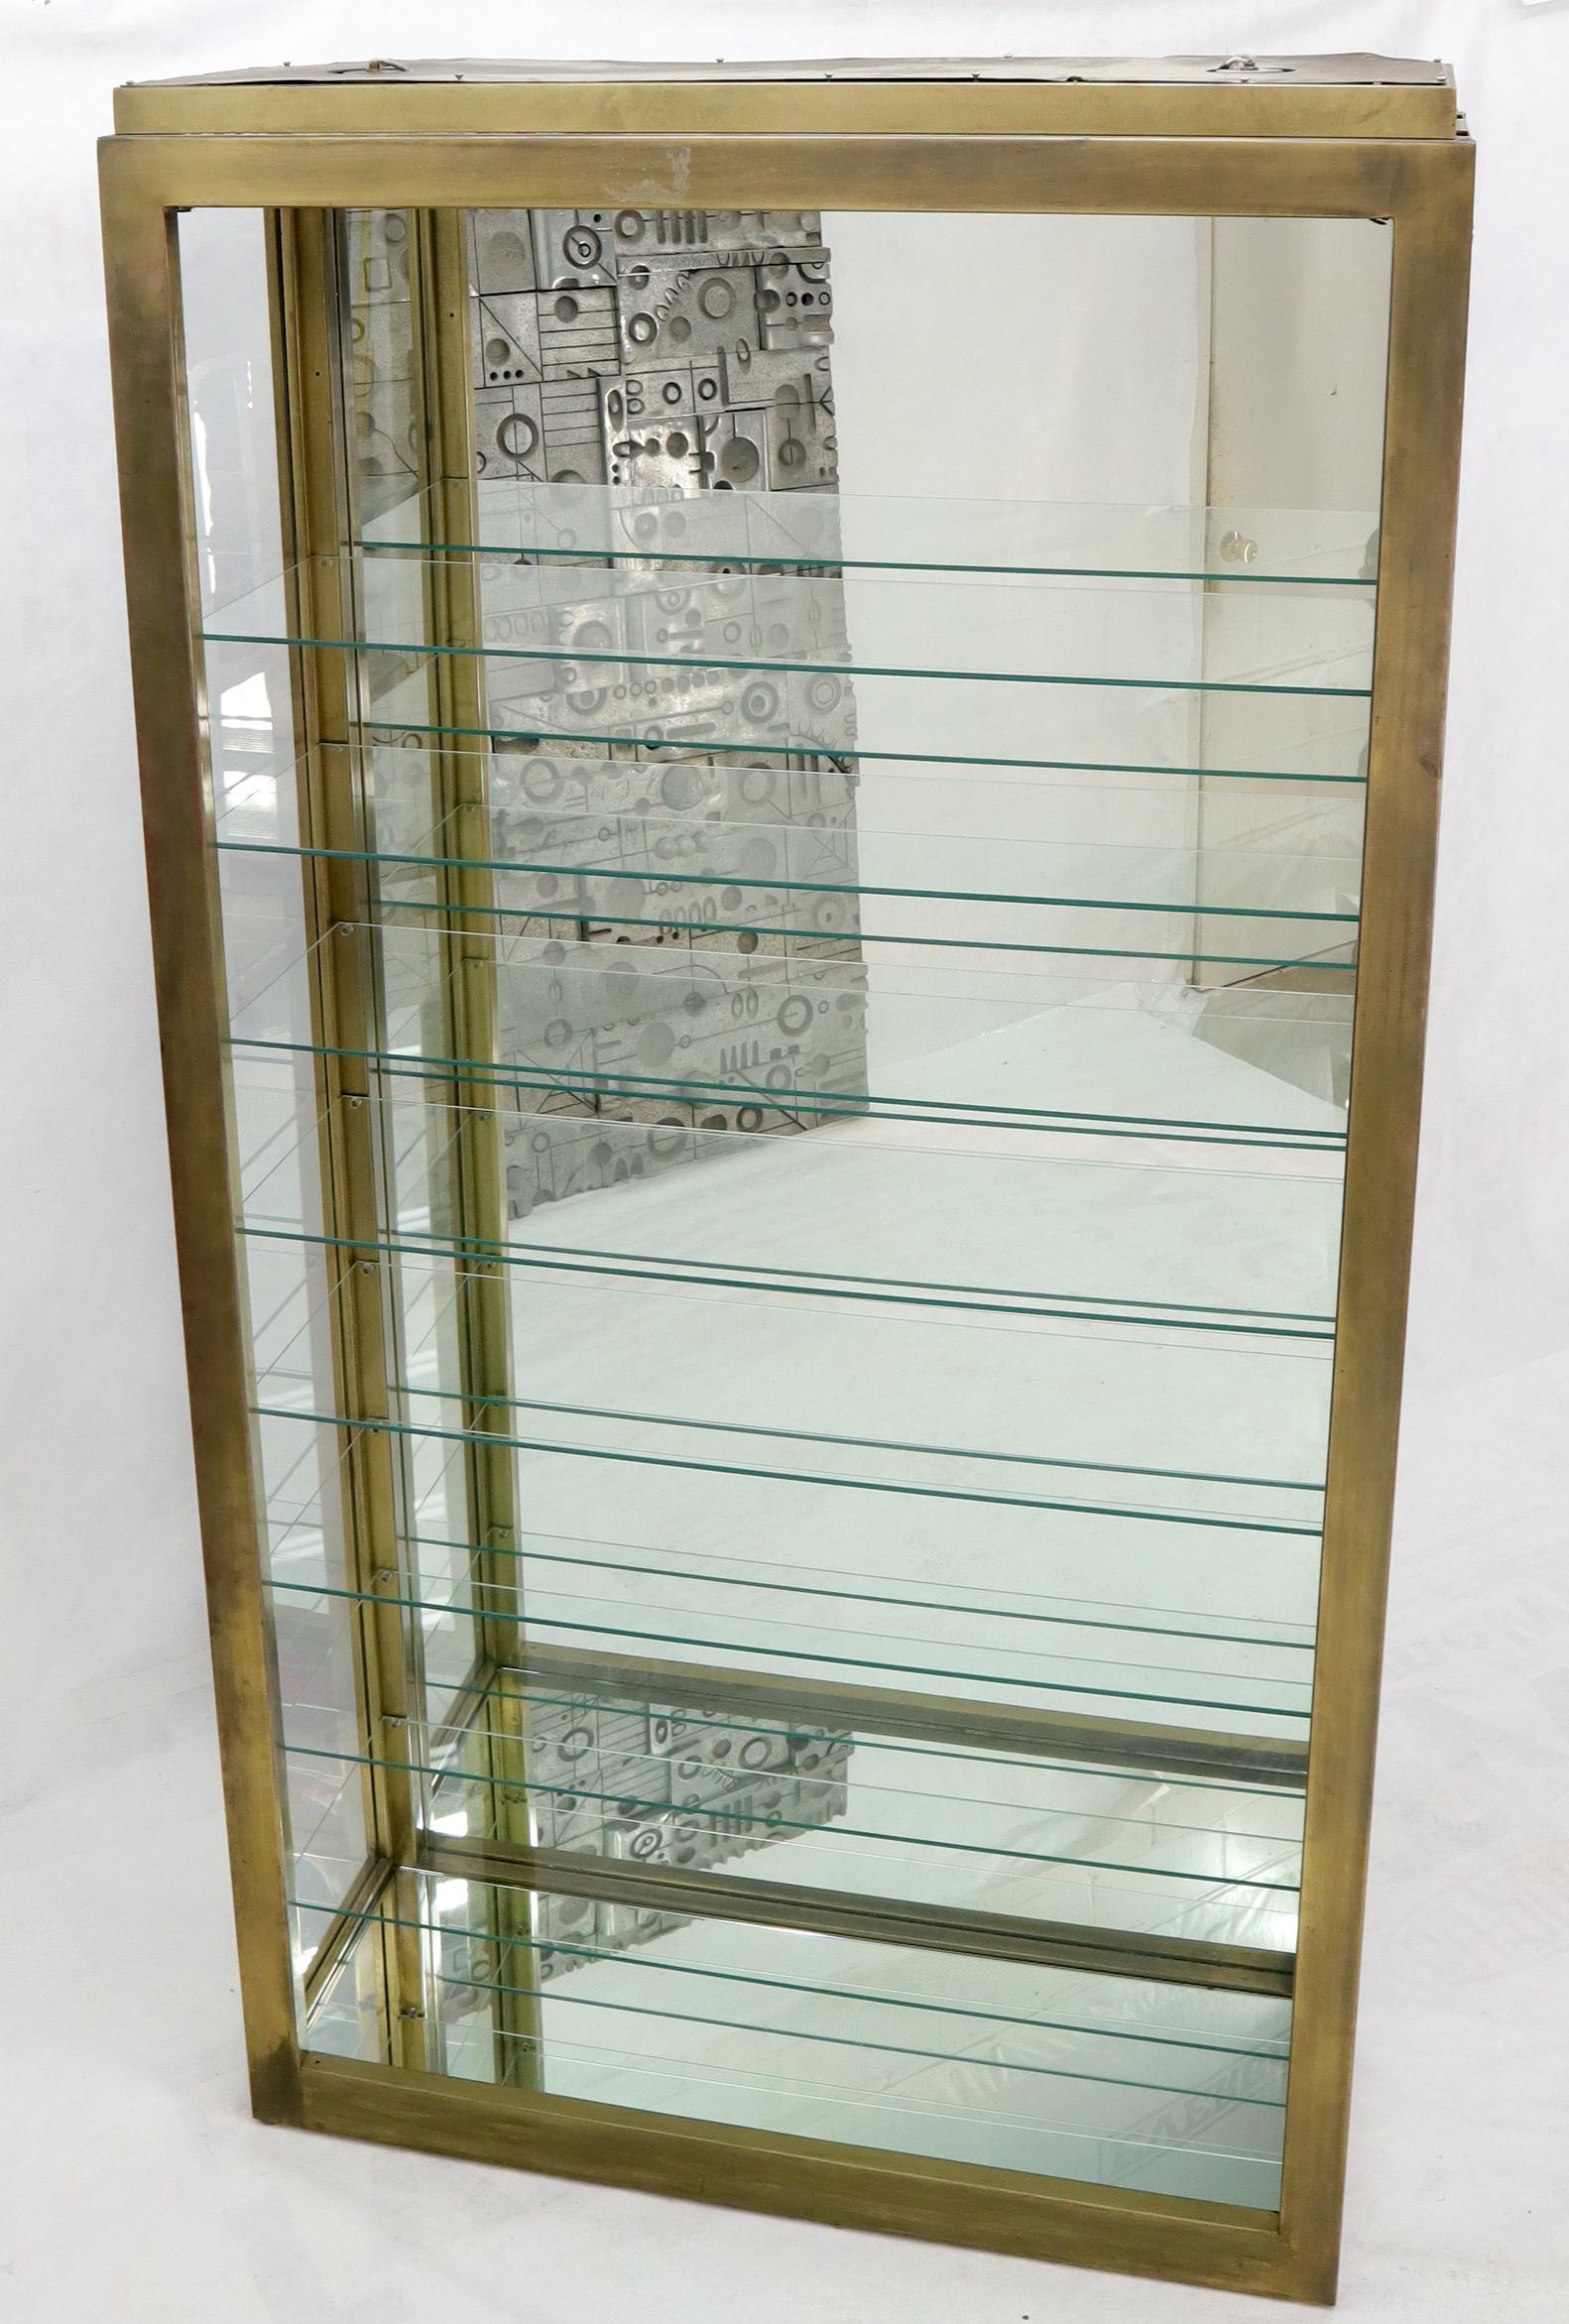 Anodized Tall Narrow Brass Finish Adjustable Glass Shelves Unit Bookcase Storage Etagere